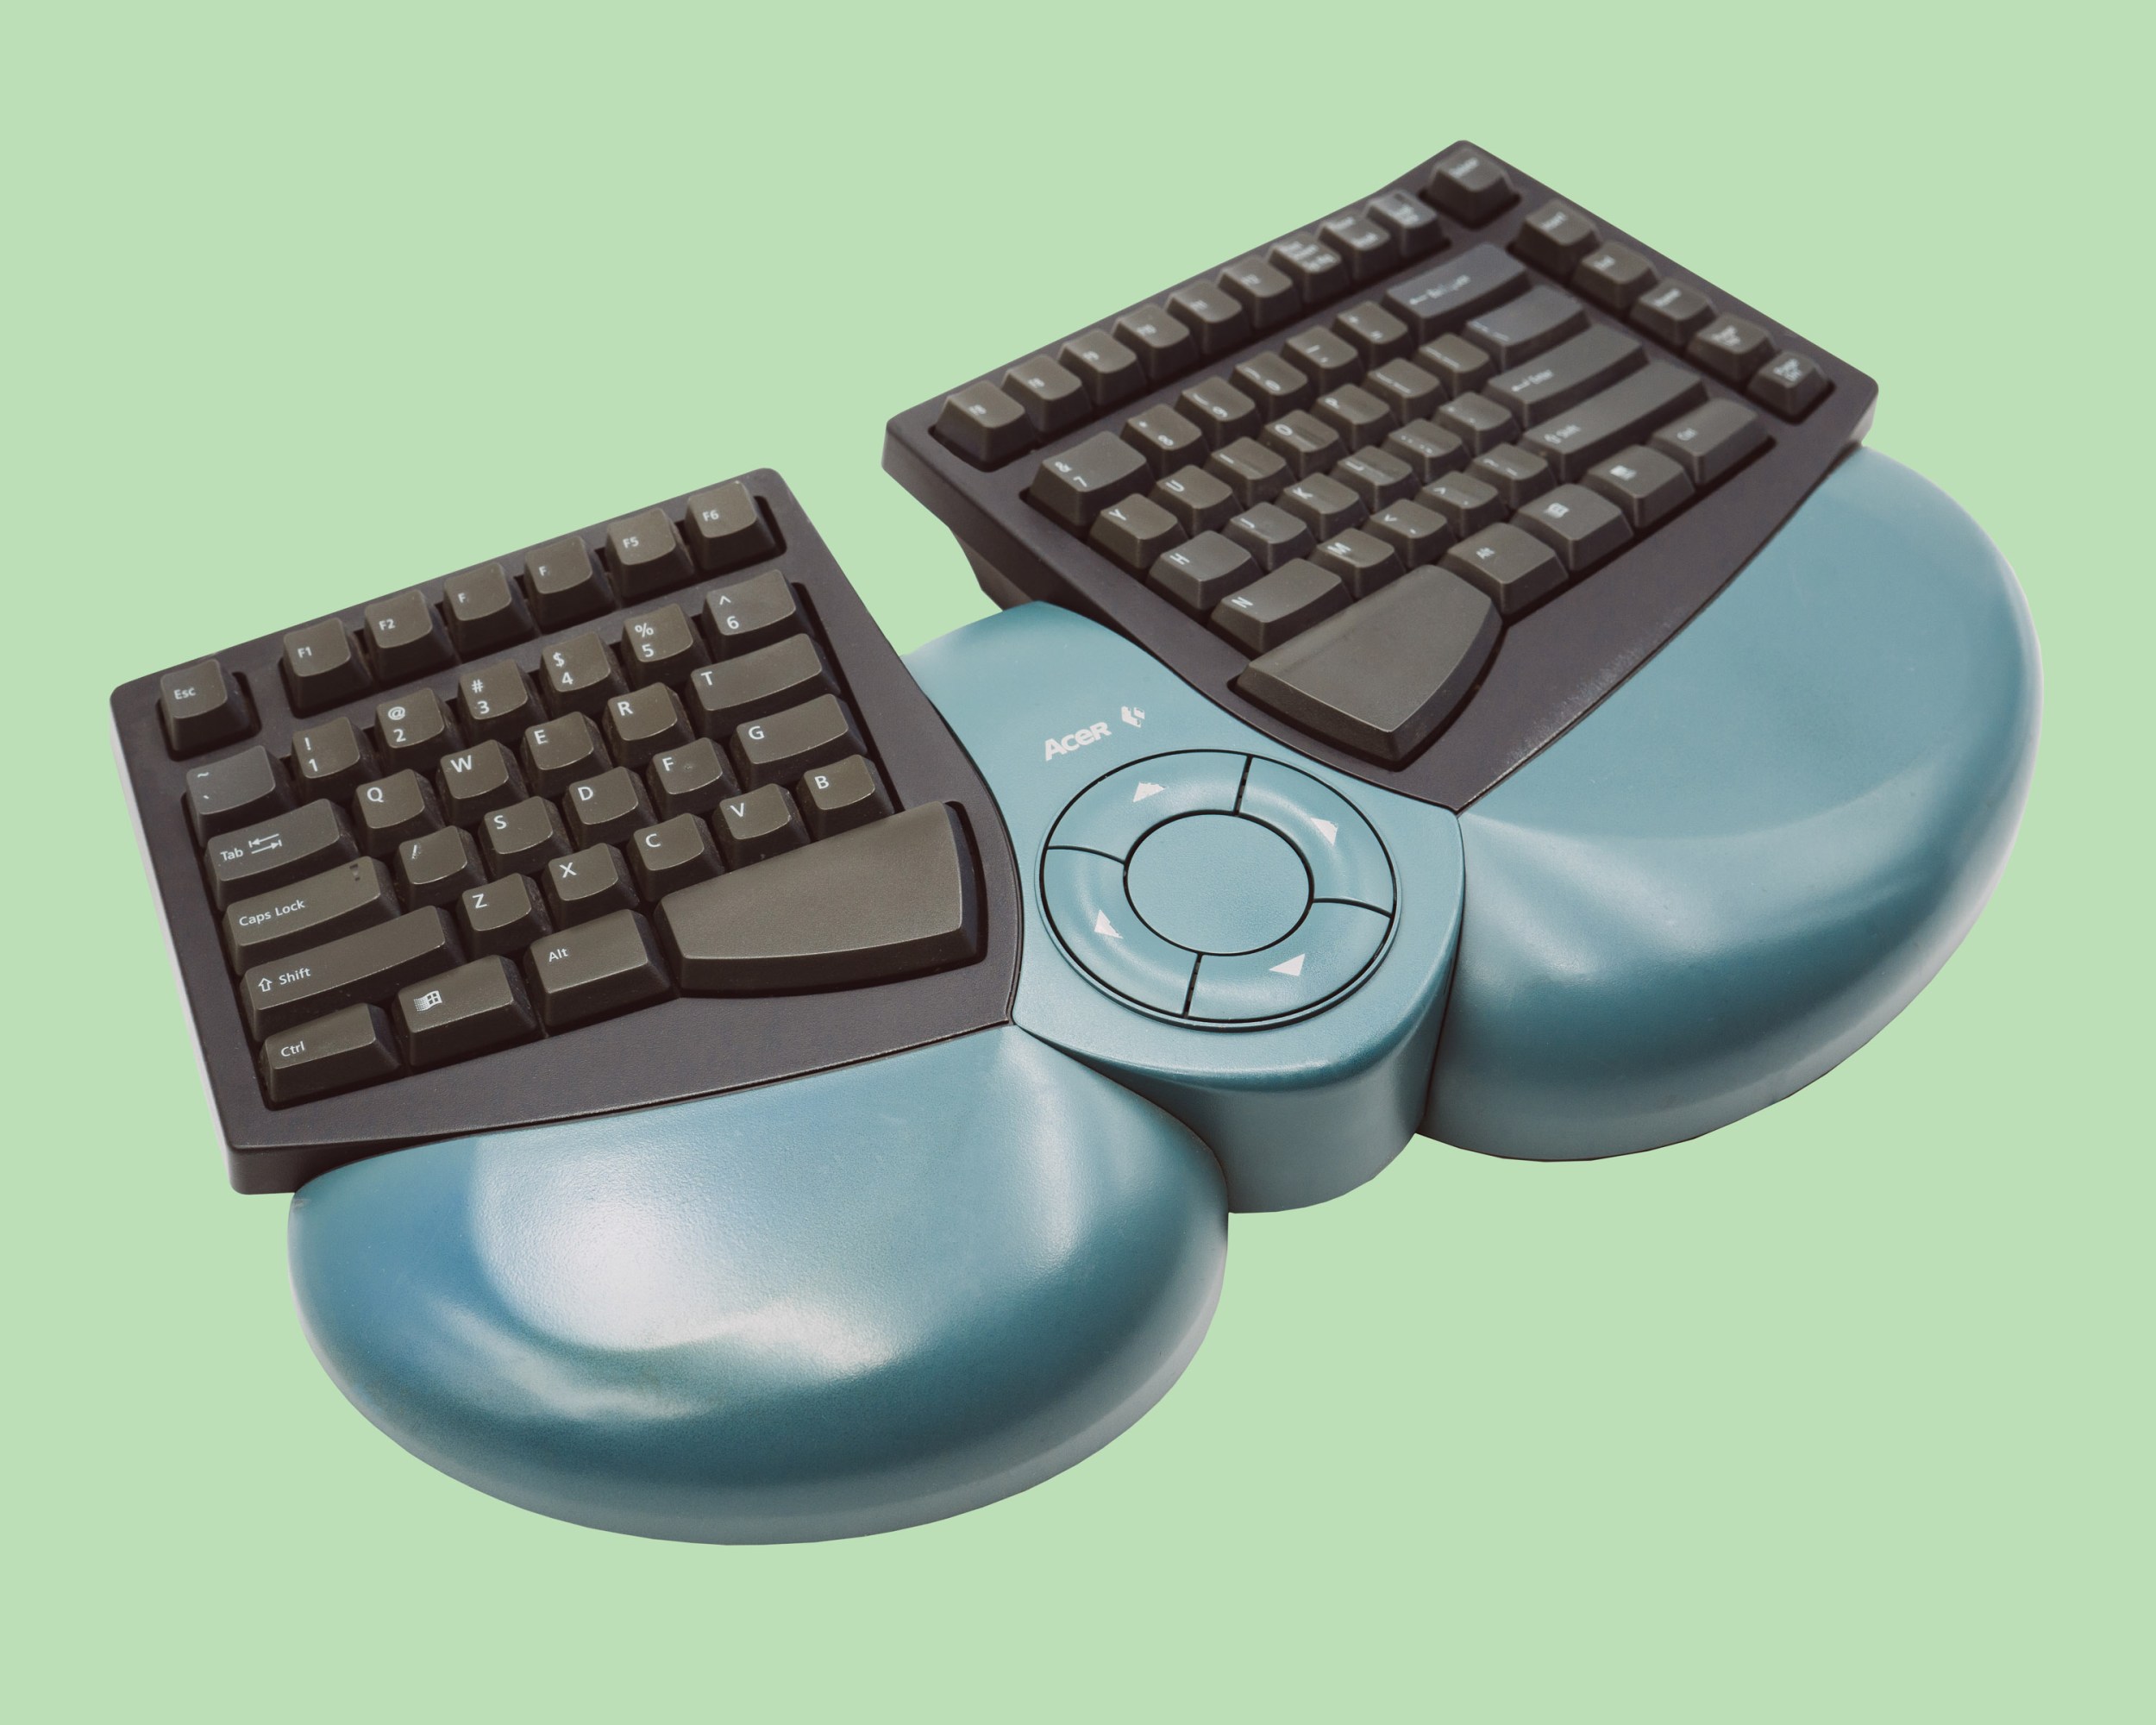 Acer keyboard